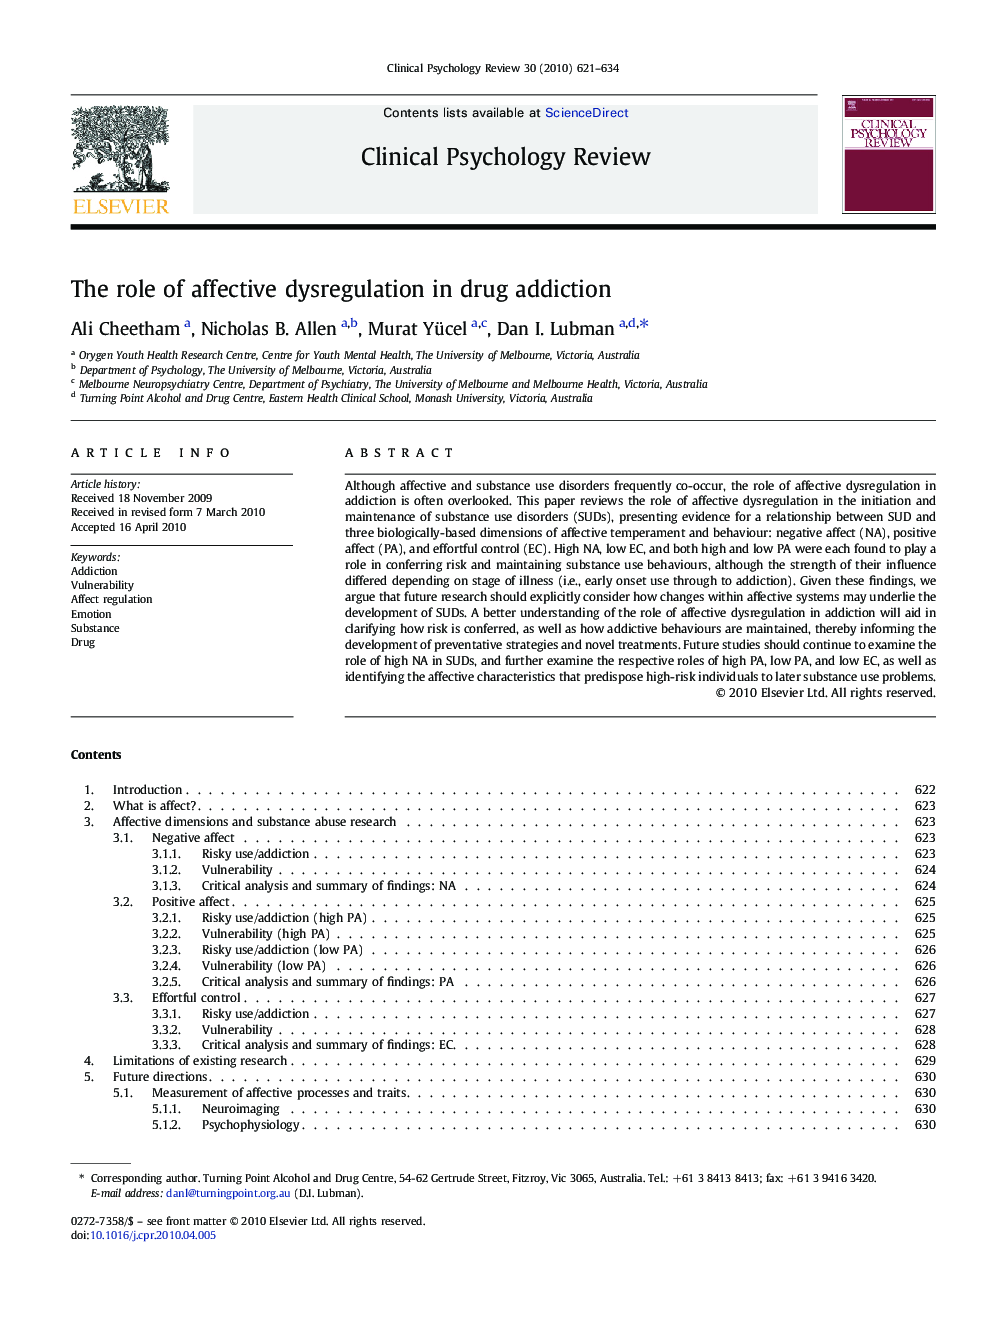 The role of affective dysregulation in drug addiction